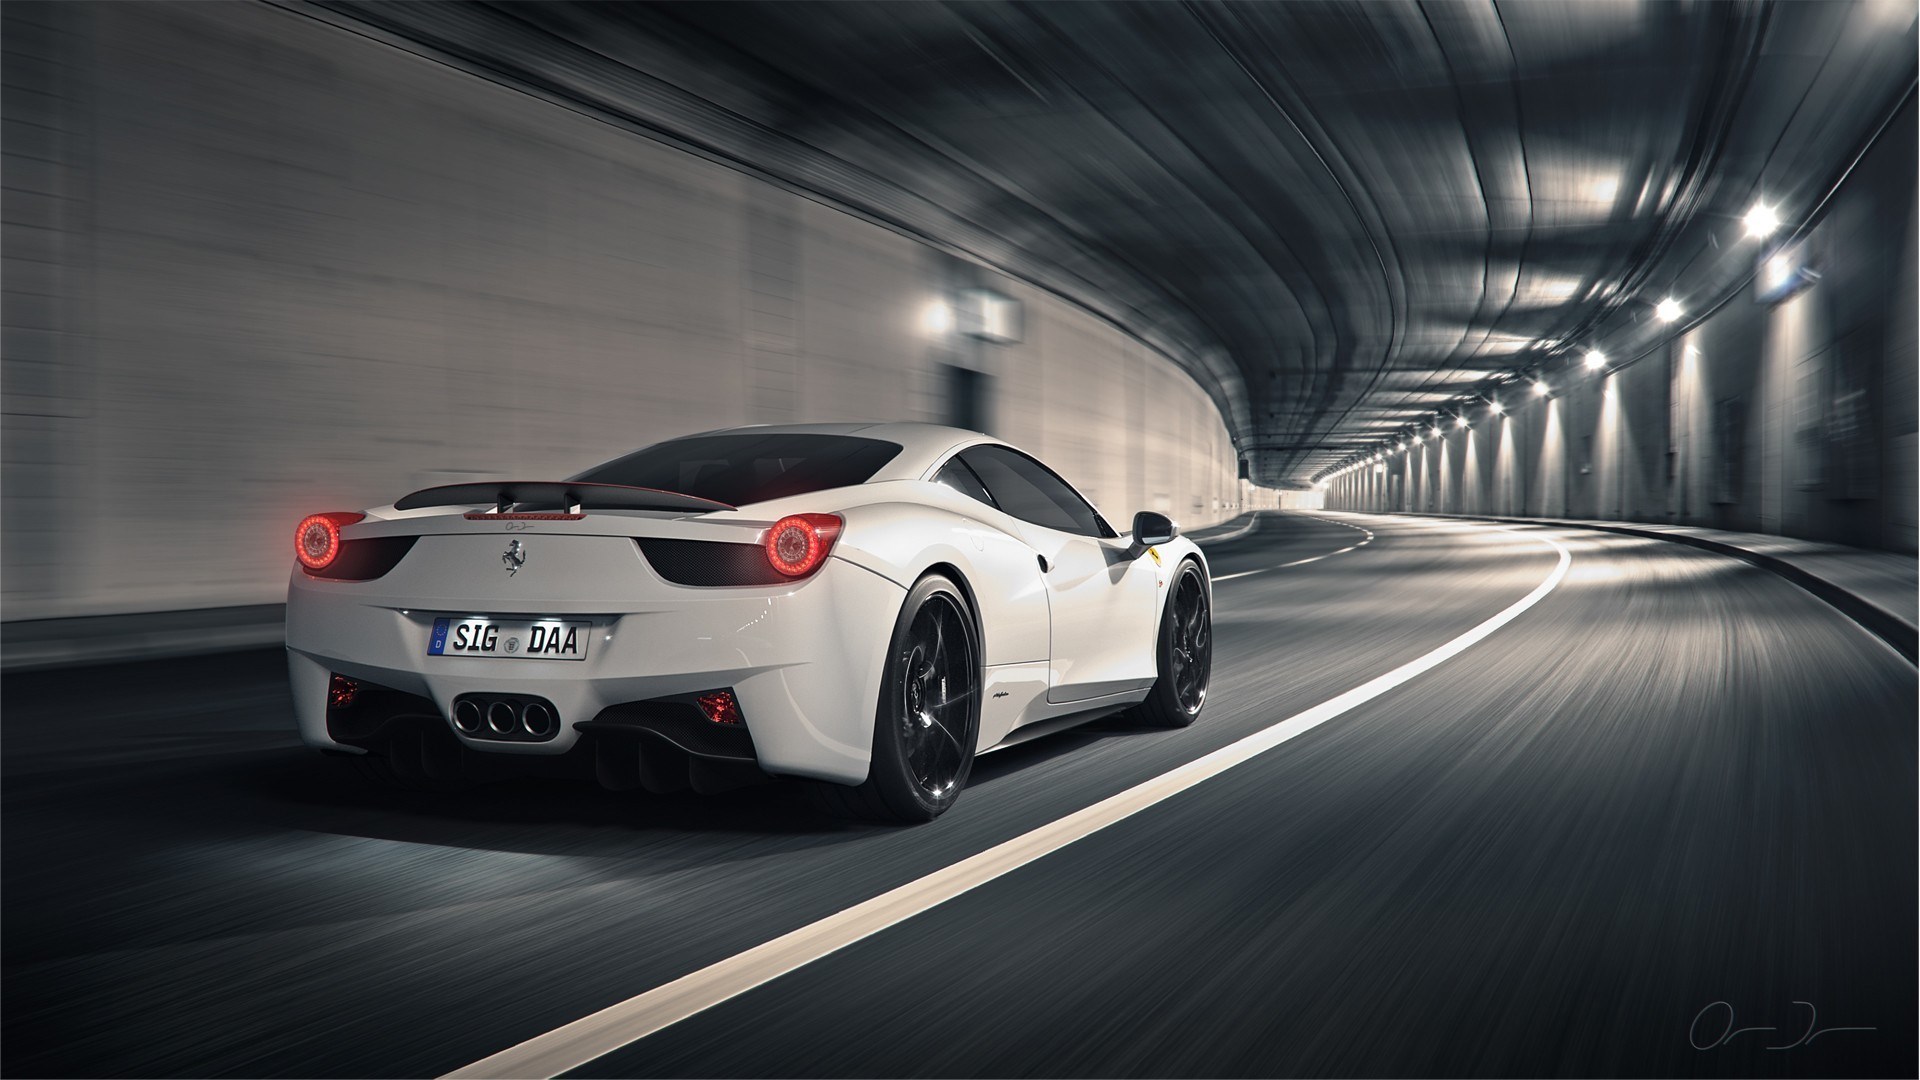 Ferrari Italia Tunnel Pictures In High Definition Or Widescreen